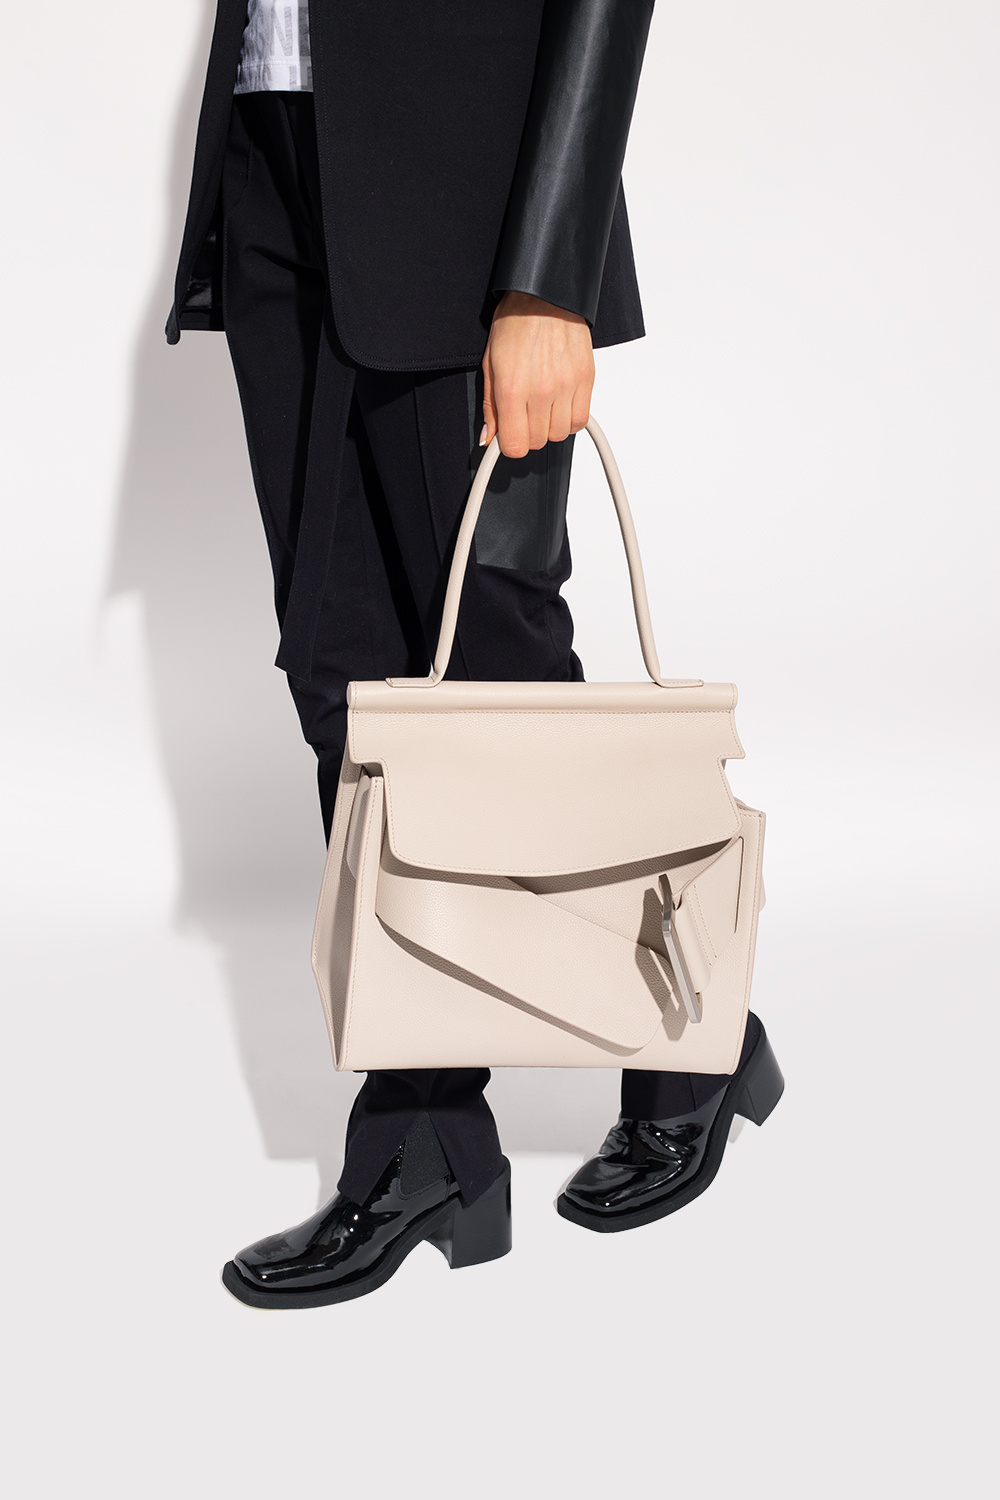 BOYY 'Karl Soft' shoulder bag, Women's Bags